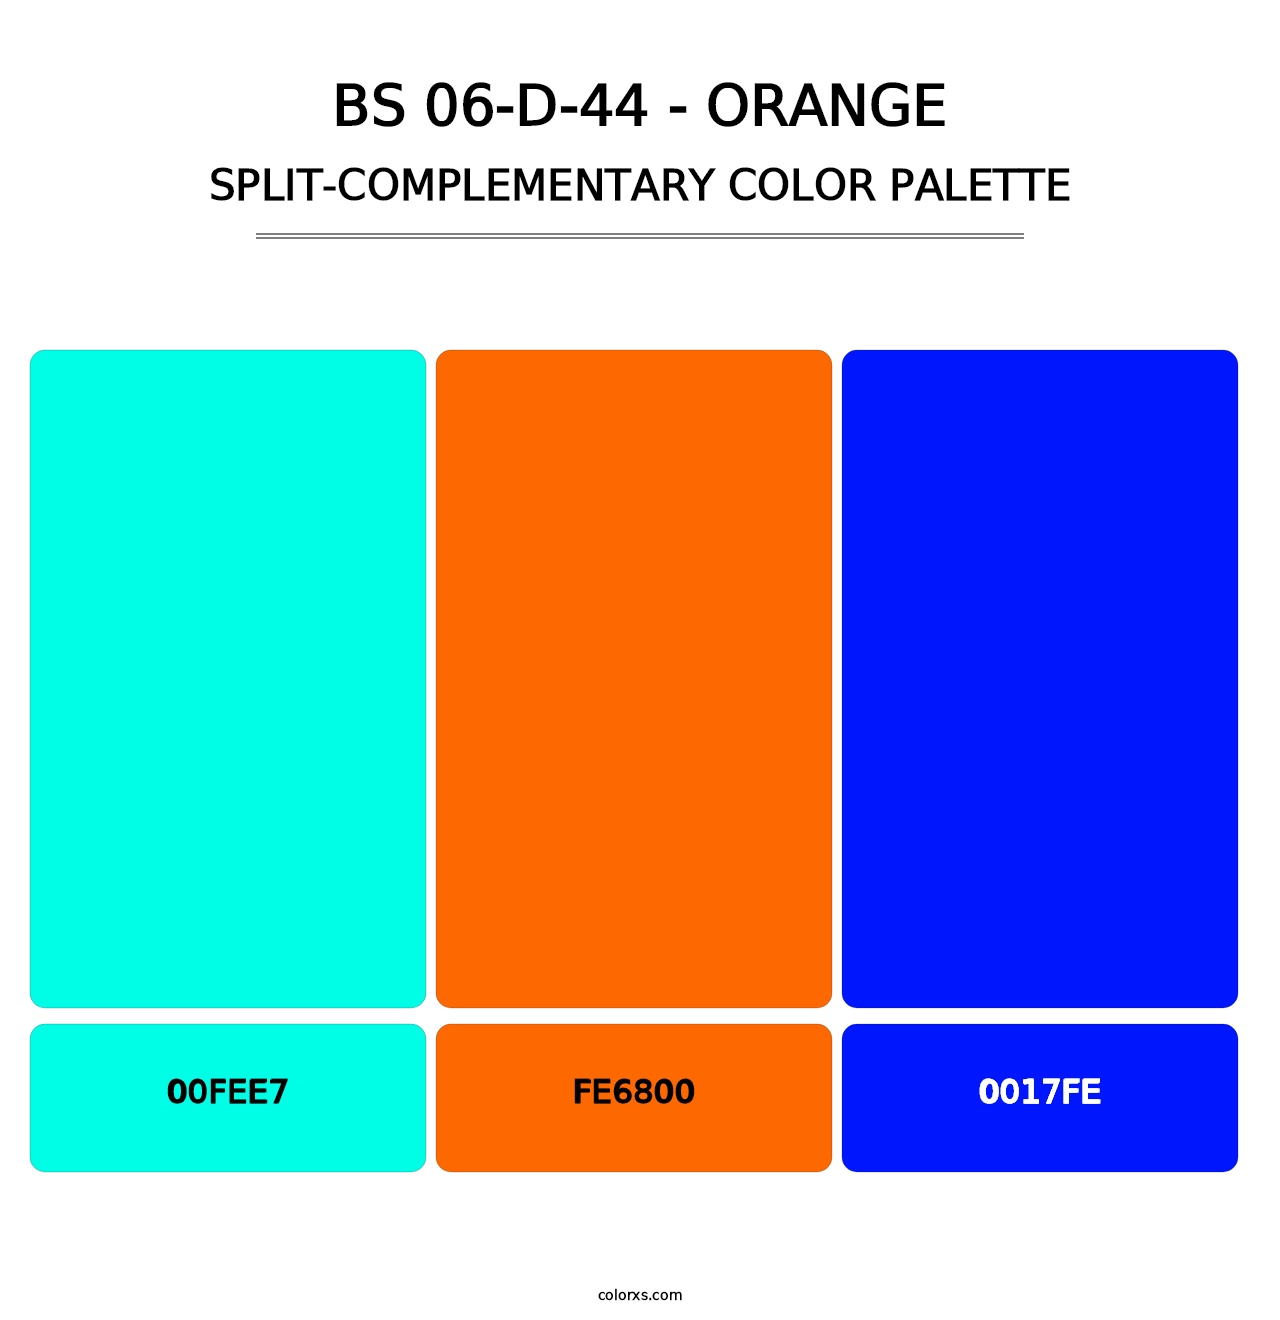 BS 06-D-44 - Orange - Split-Complementary Color Palette